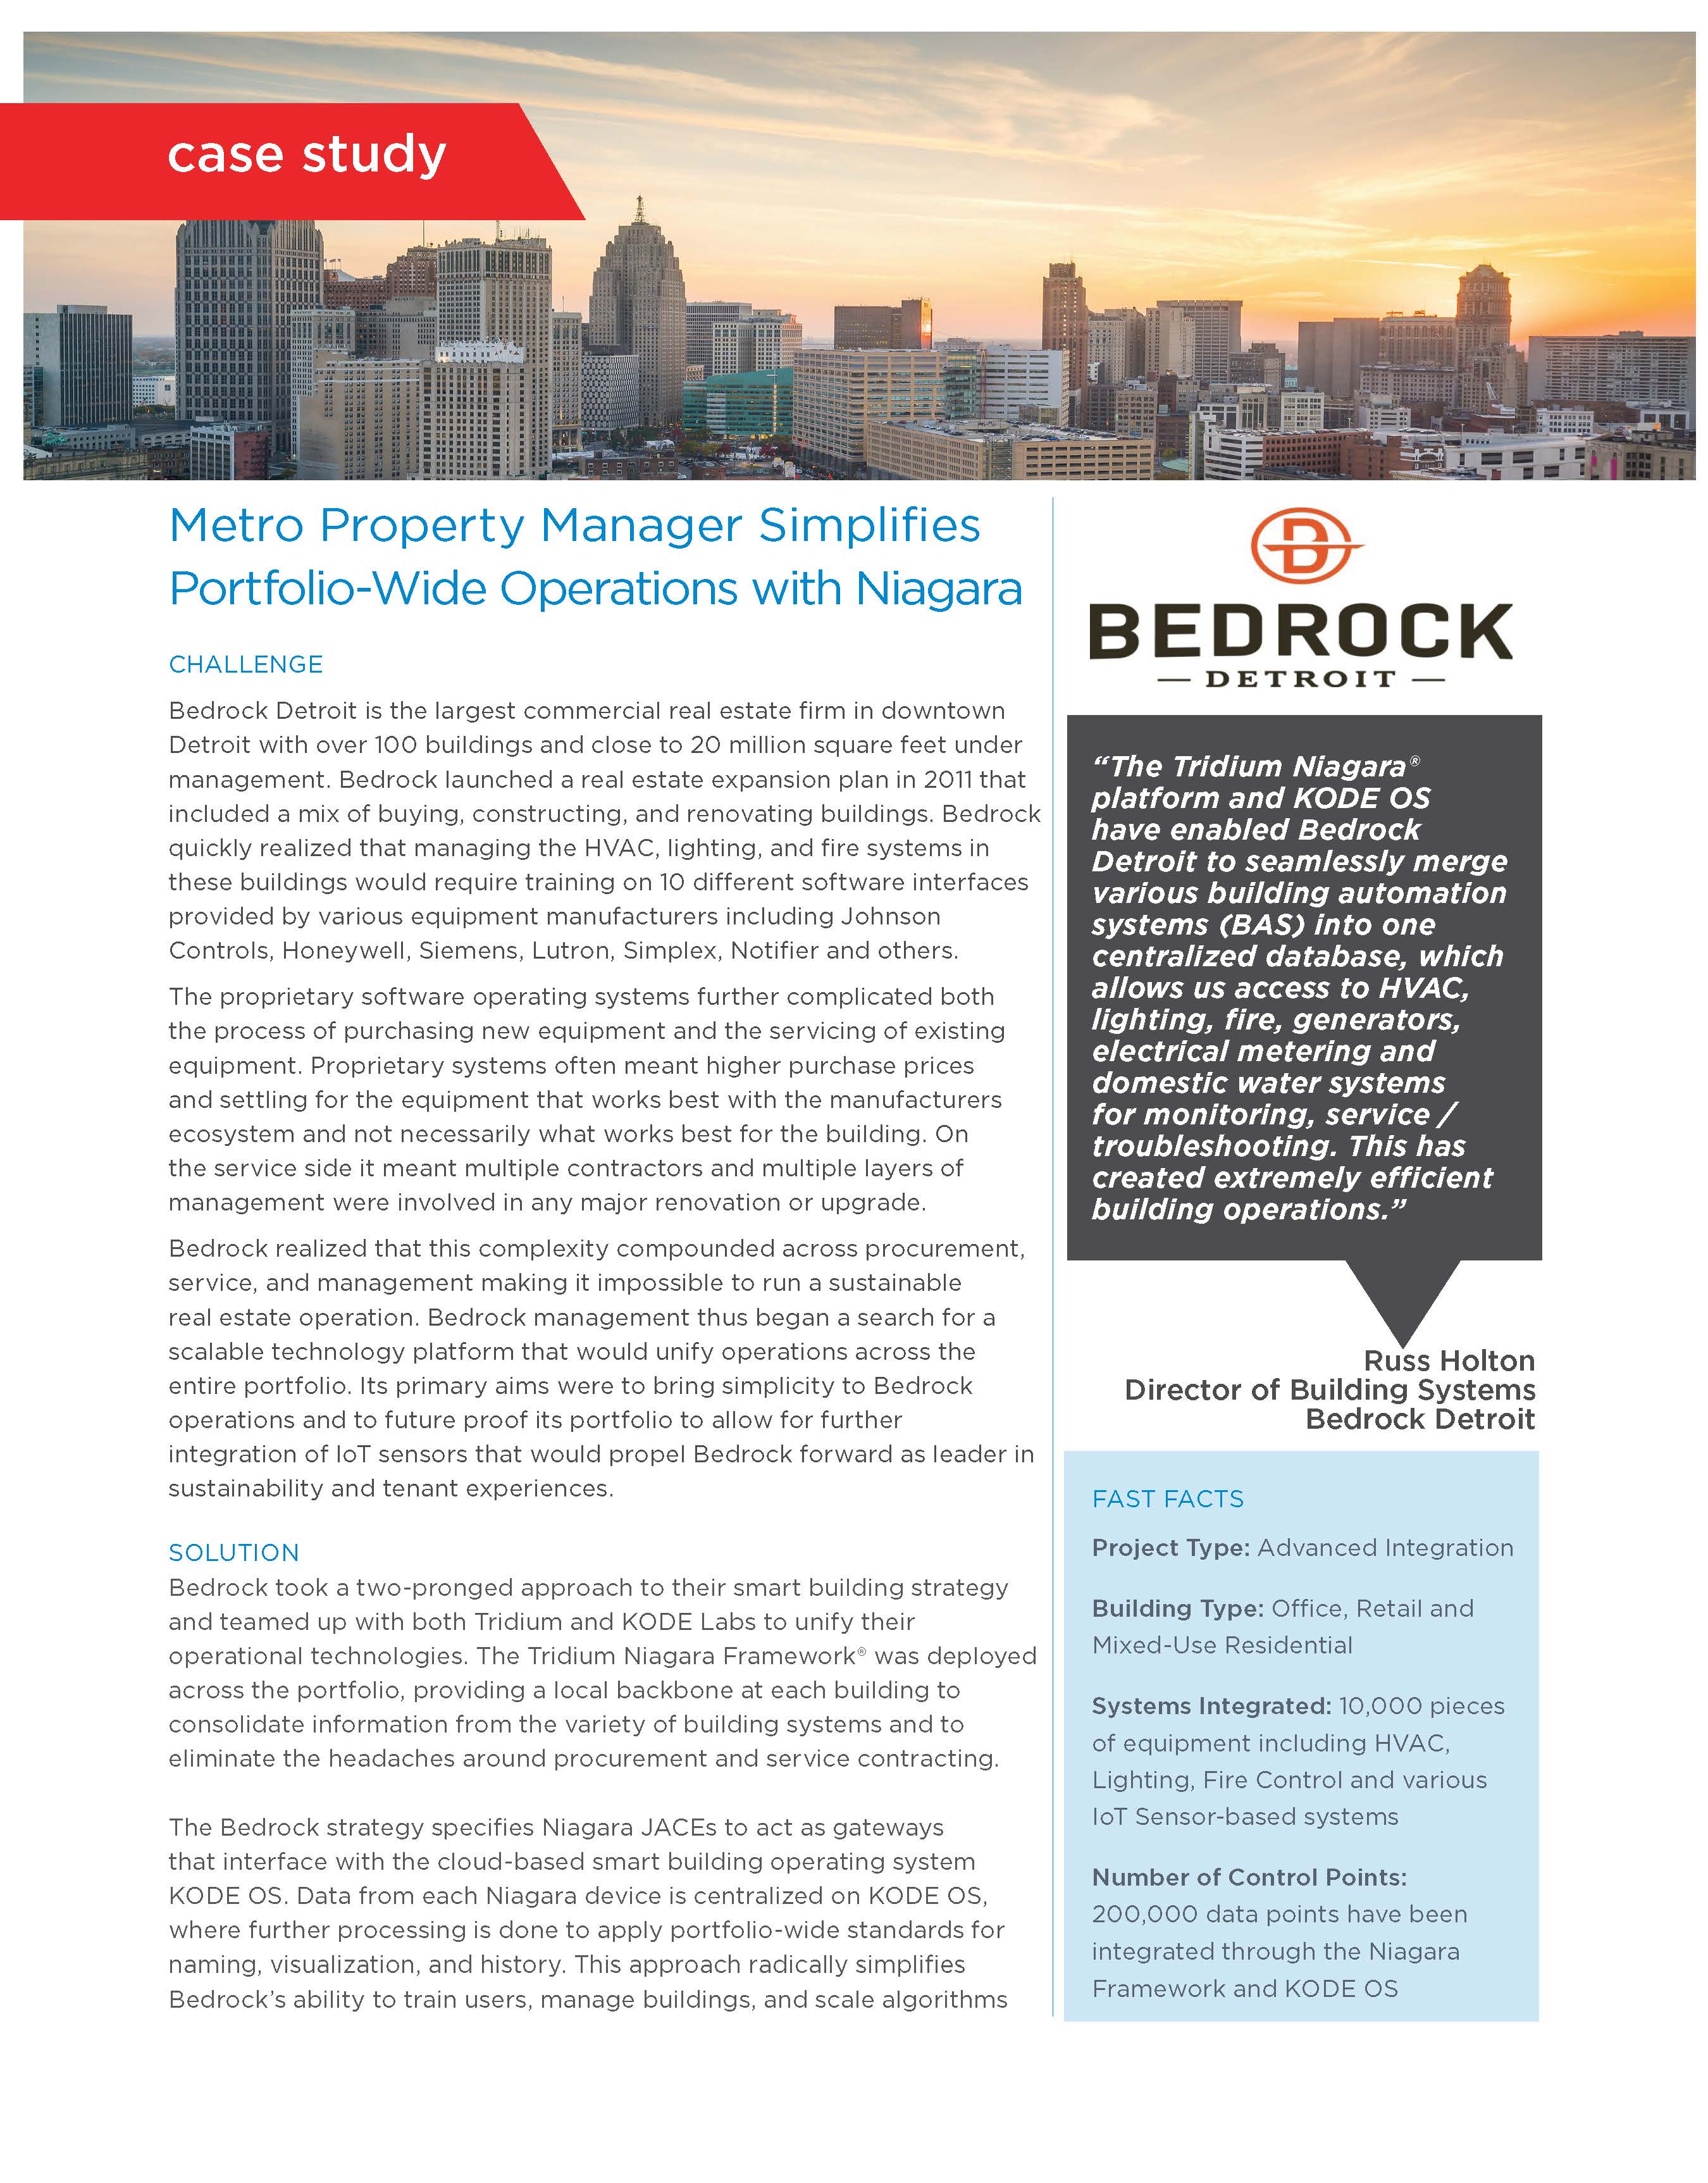 Metro Property Manager Simplifies Portfolio-Wide Operations with Niagara